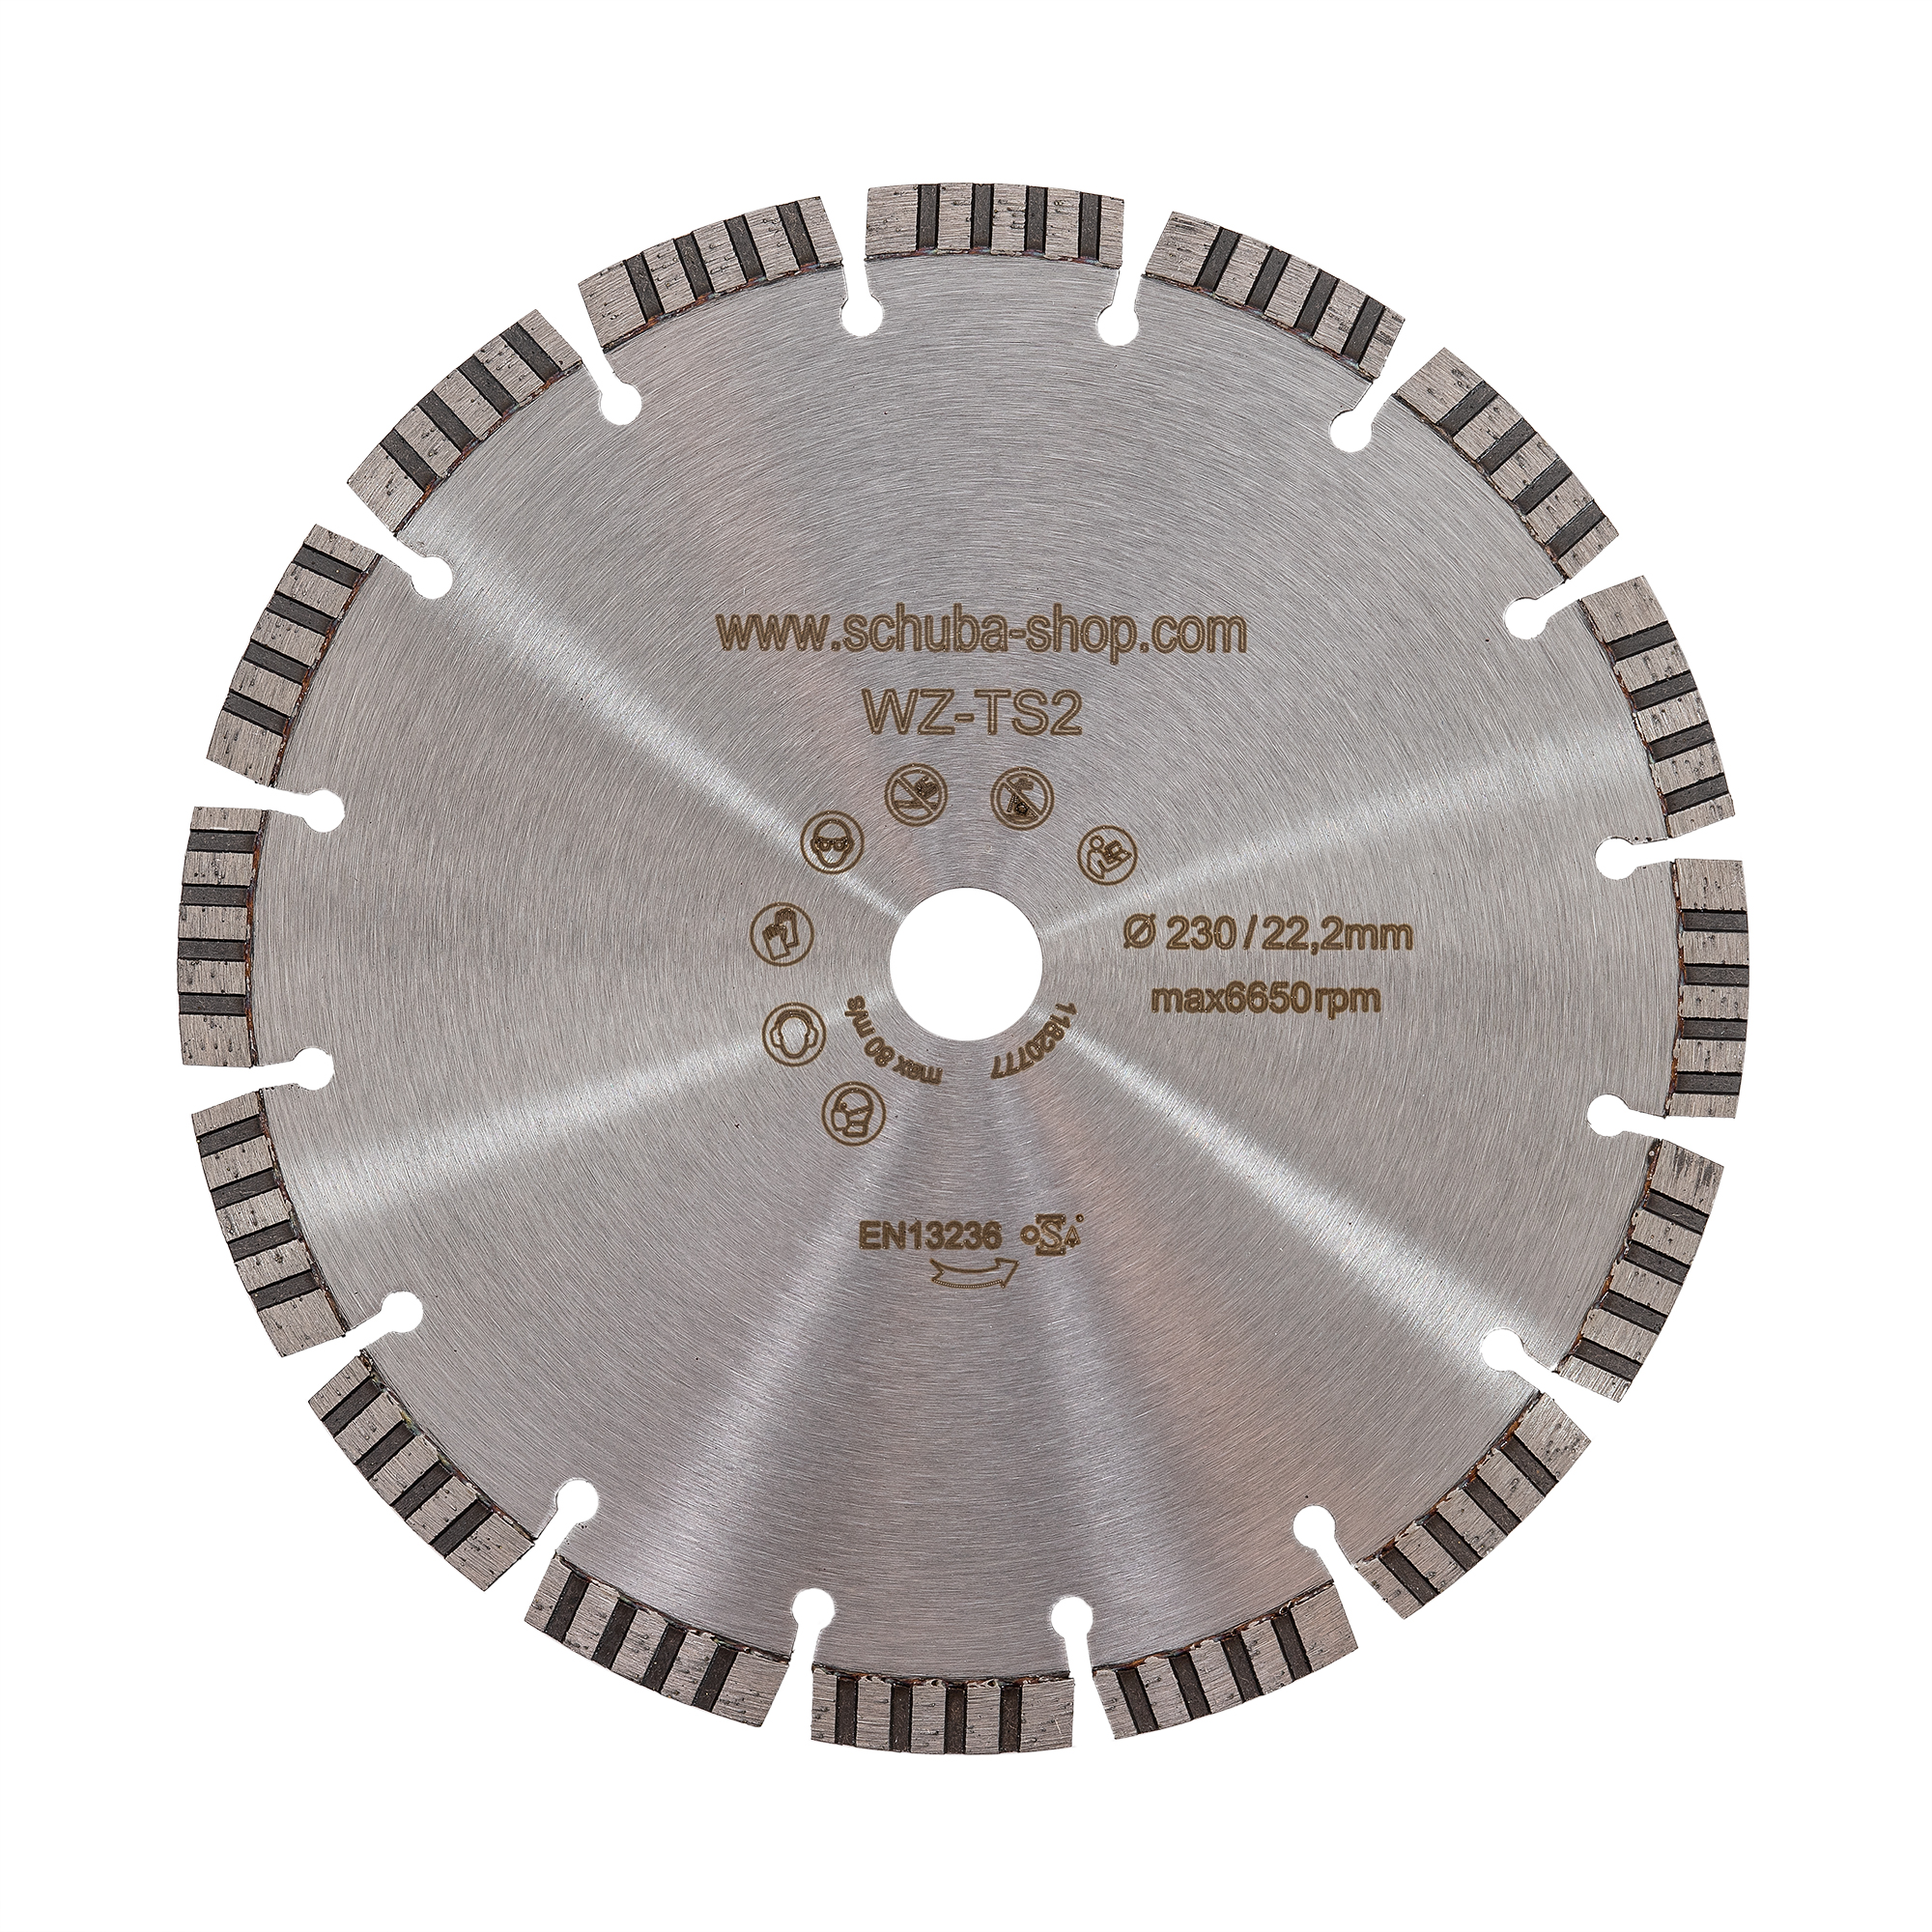 Diamanttrennscheibe Schuba®WZ-TS2, Durchmesser 230mm